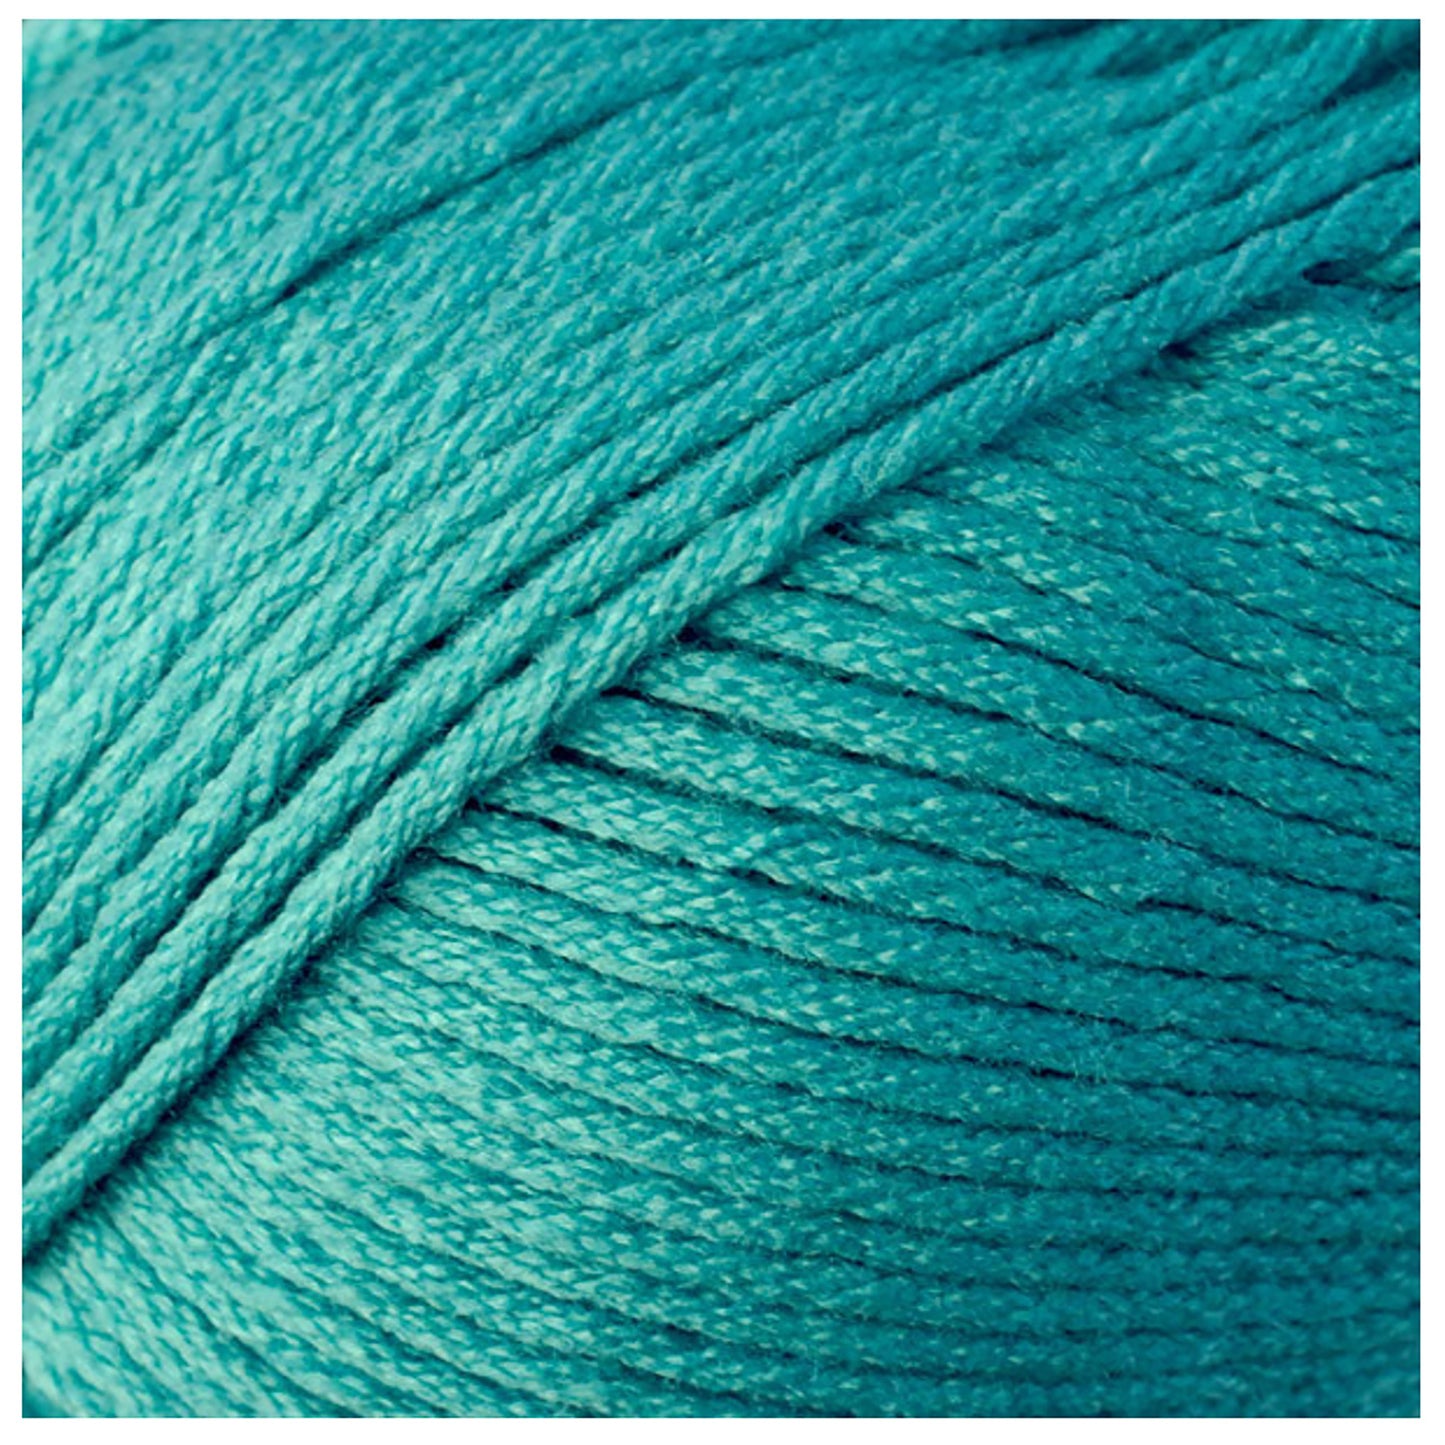 Colorful Crochet Skirt/Cowl - XS/S/M - Dream Color Crochet Kit Alternative View #2